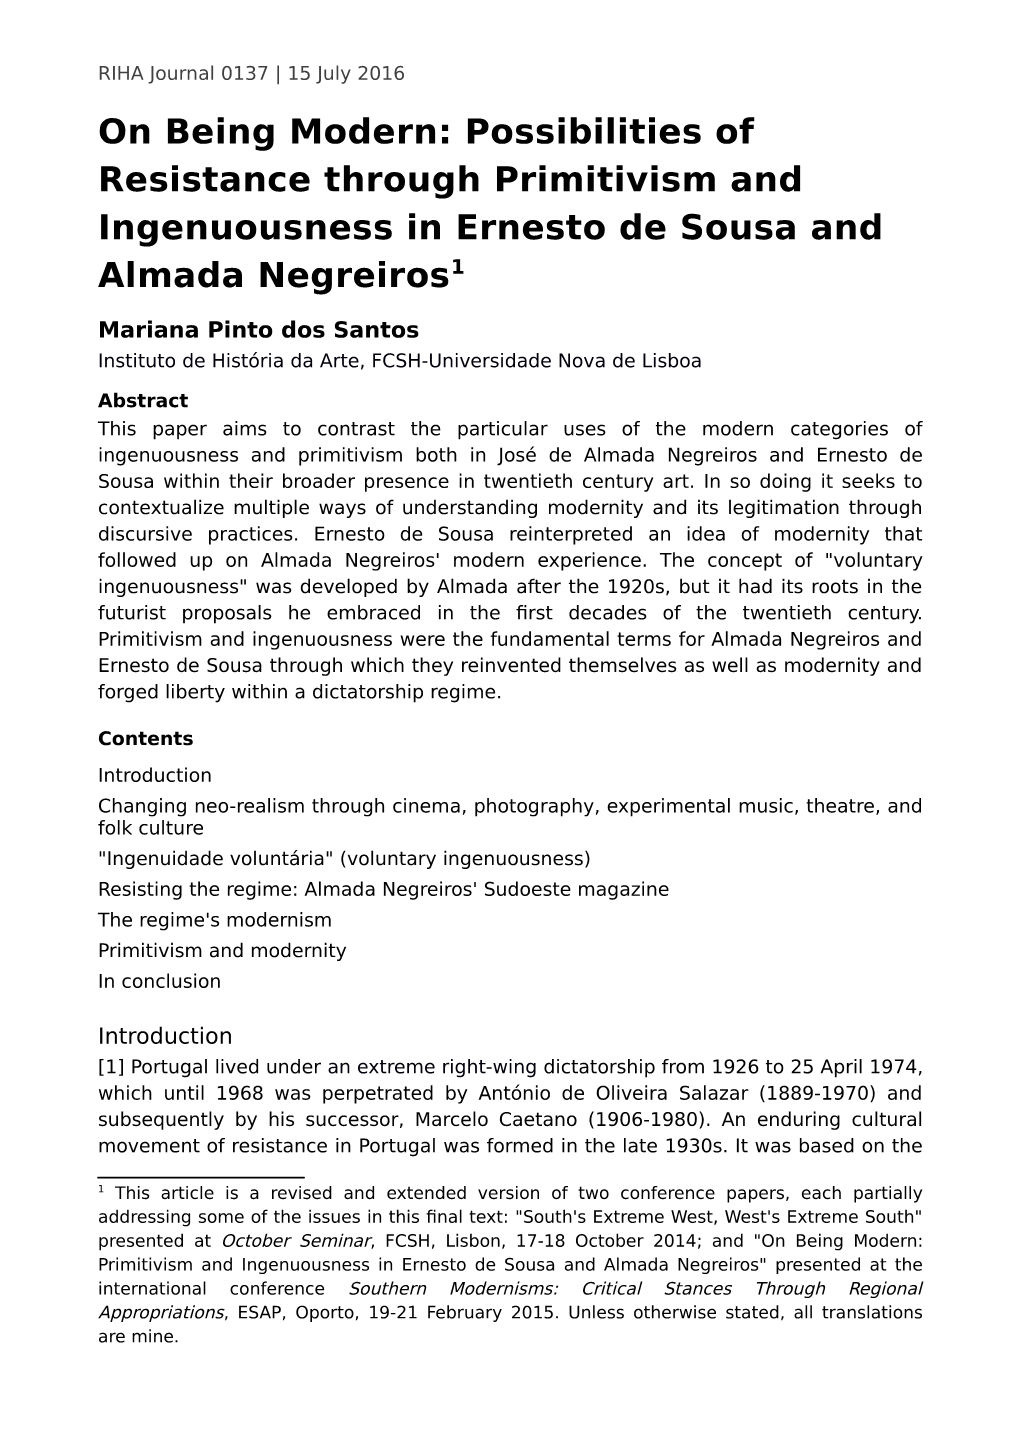 Possibilities of Resistance Through Primitivism and Ingenuousness in Ernesto De Sousa and Almada Negreiros1